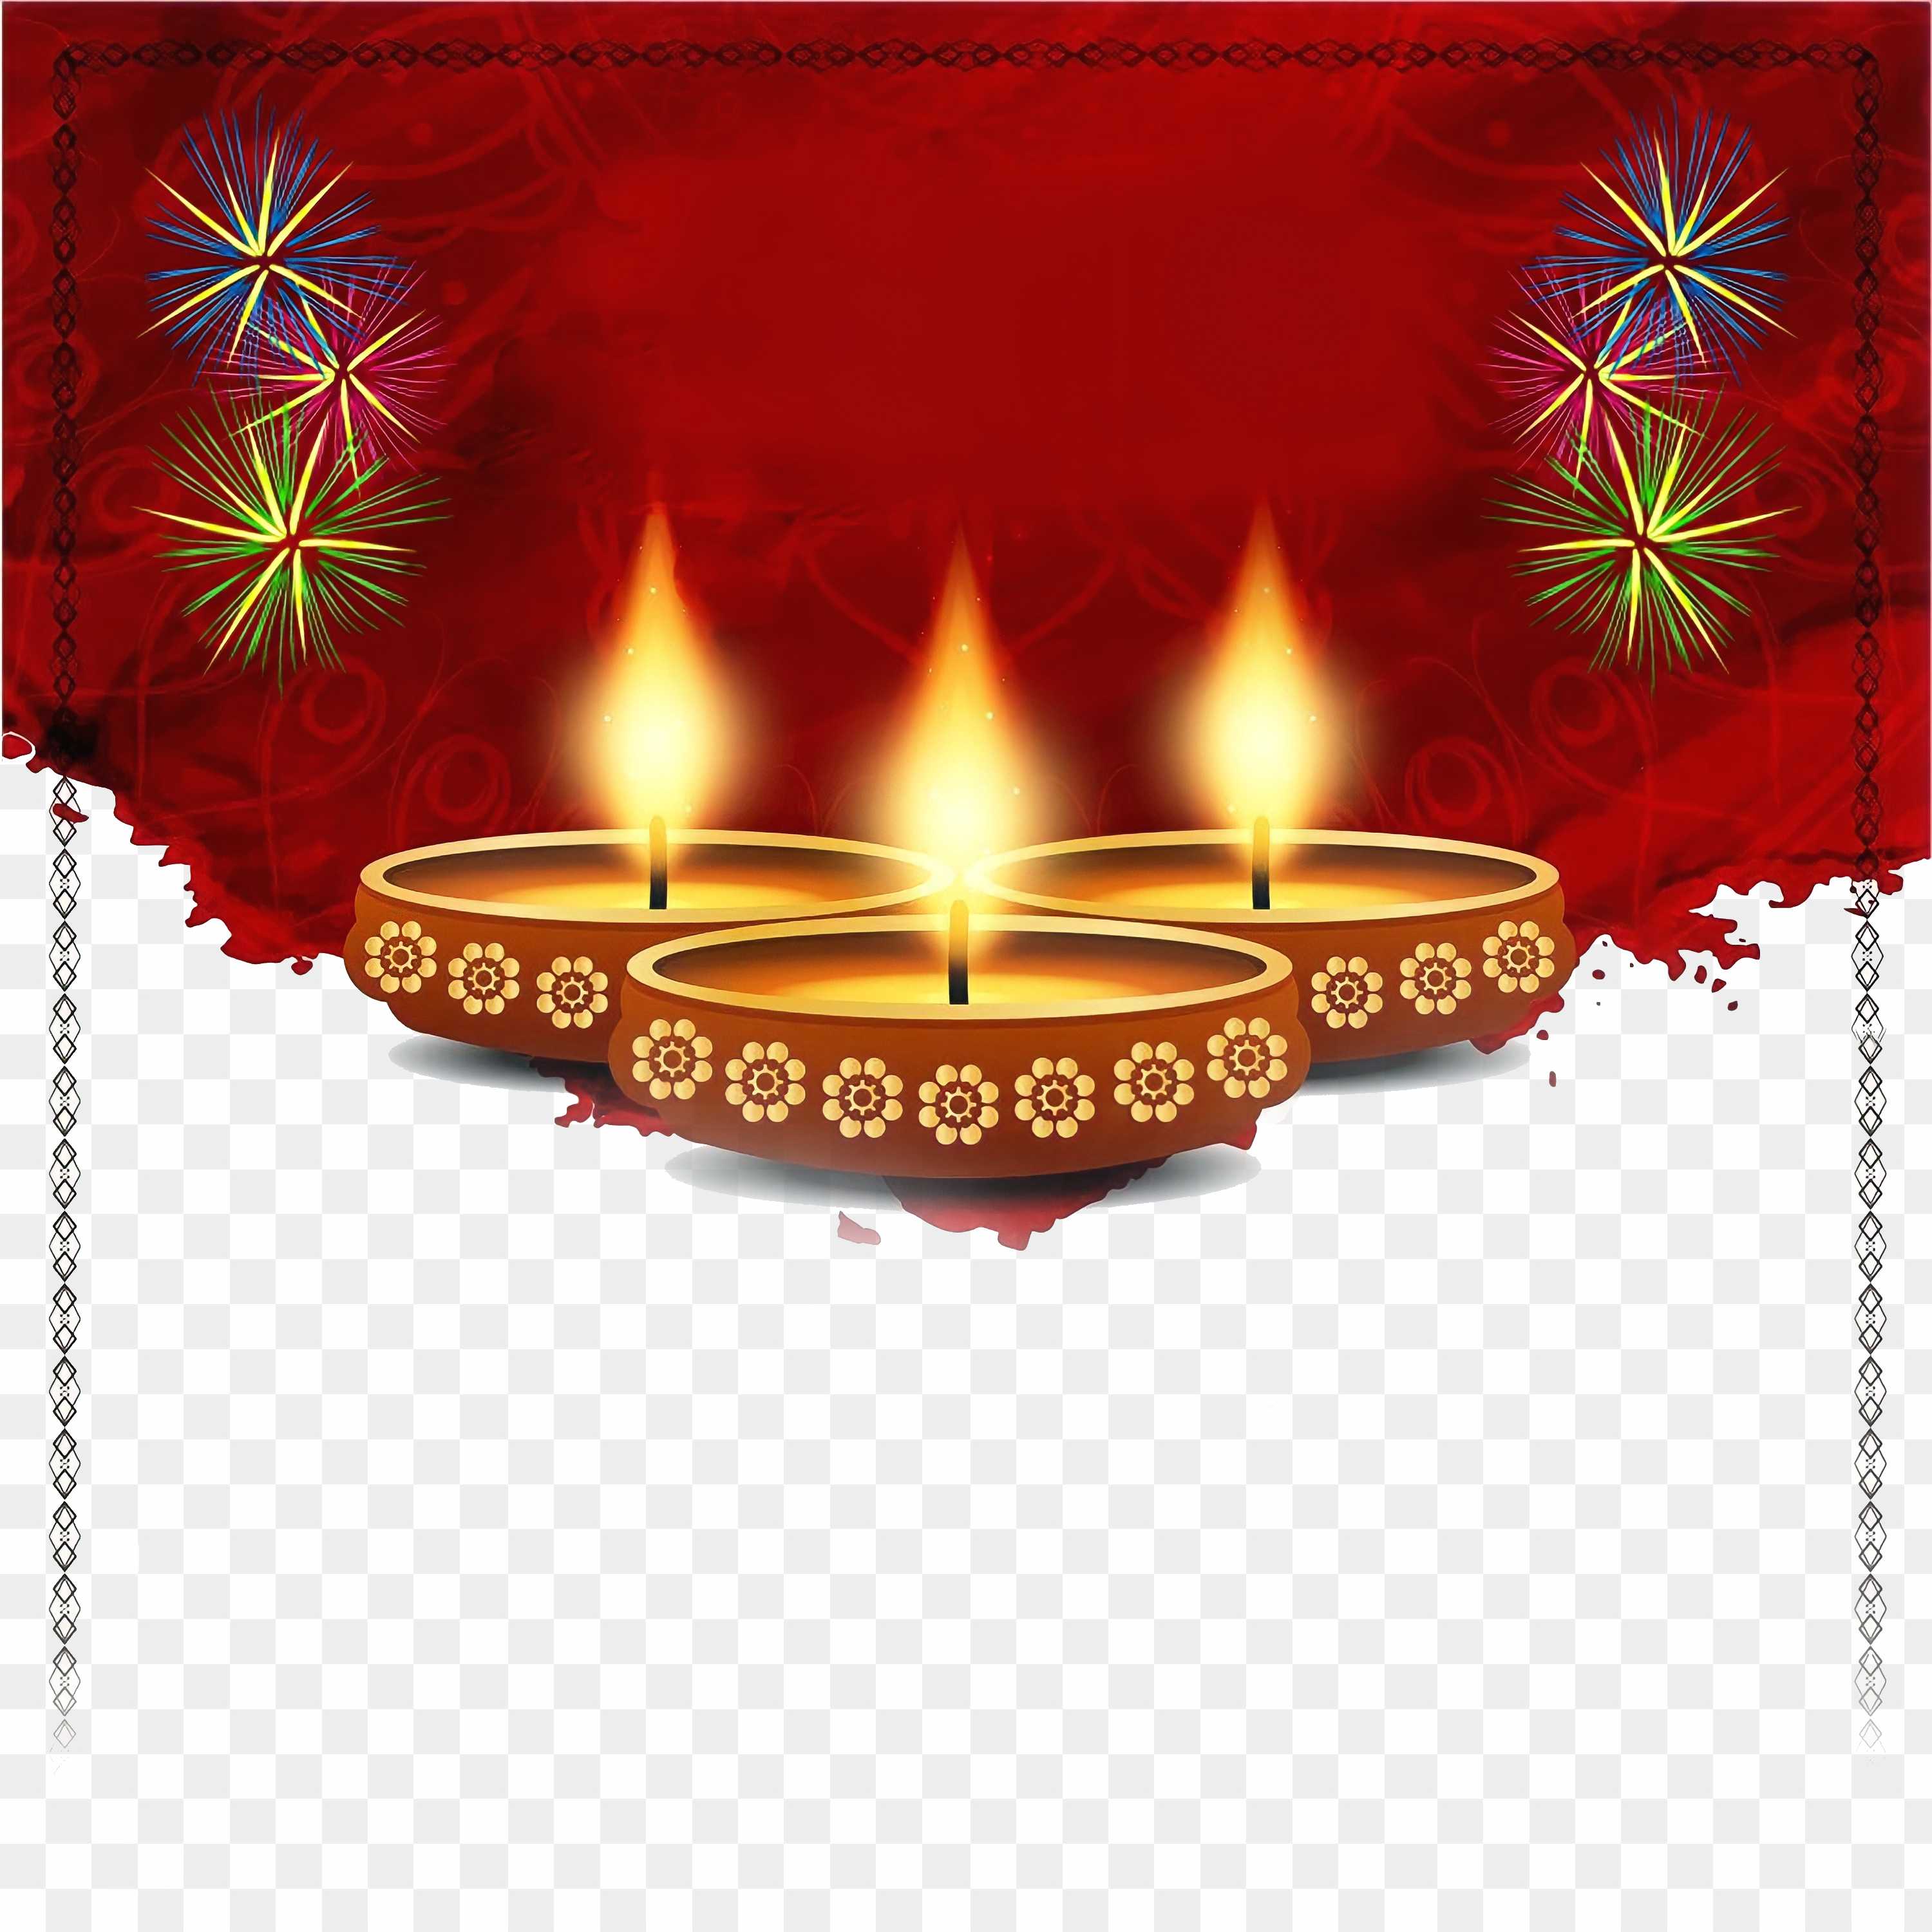 Diwali bakground png images, dipawali banner editing free transparent PNG Image